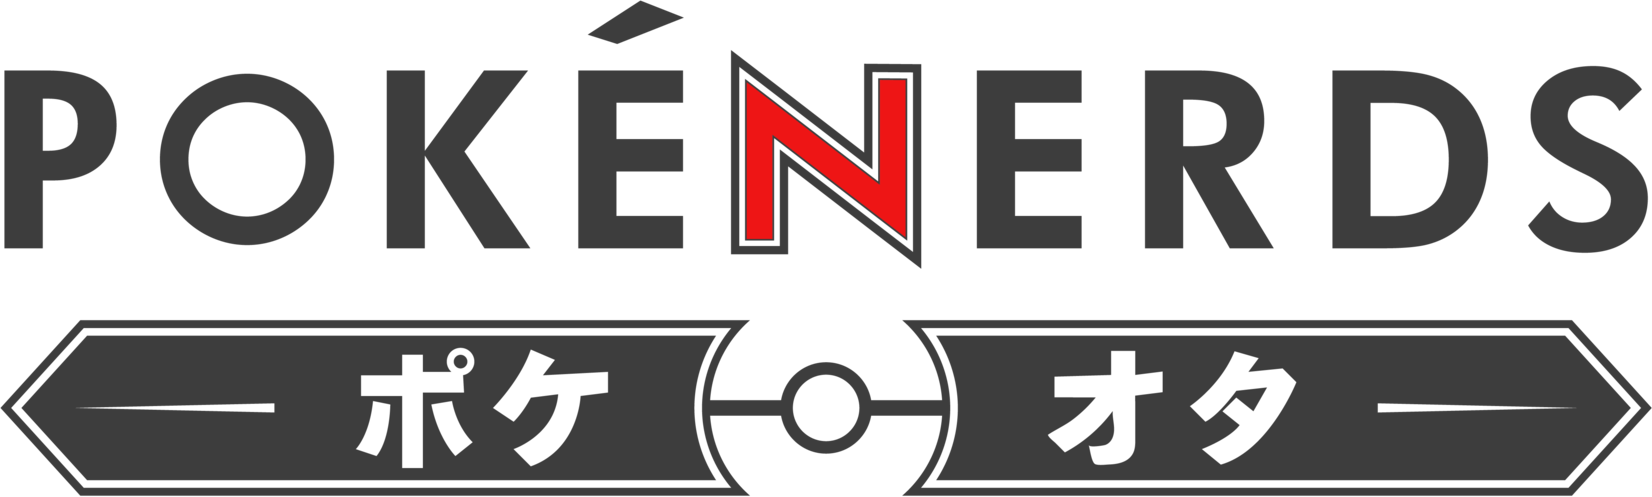 pokenerds-logo